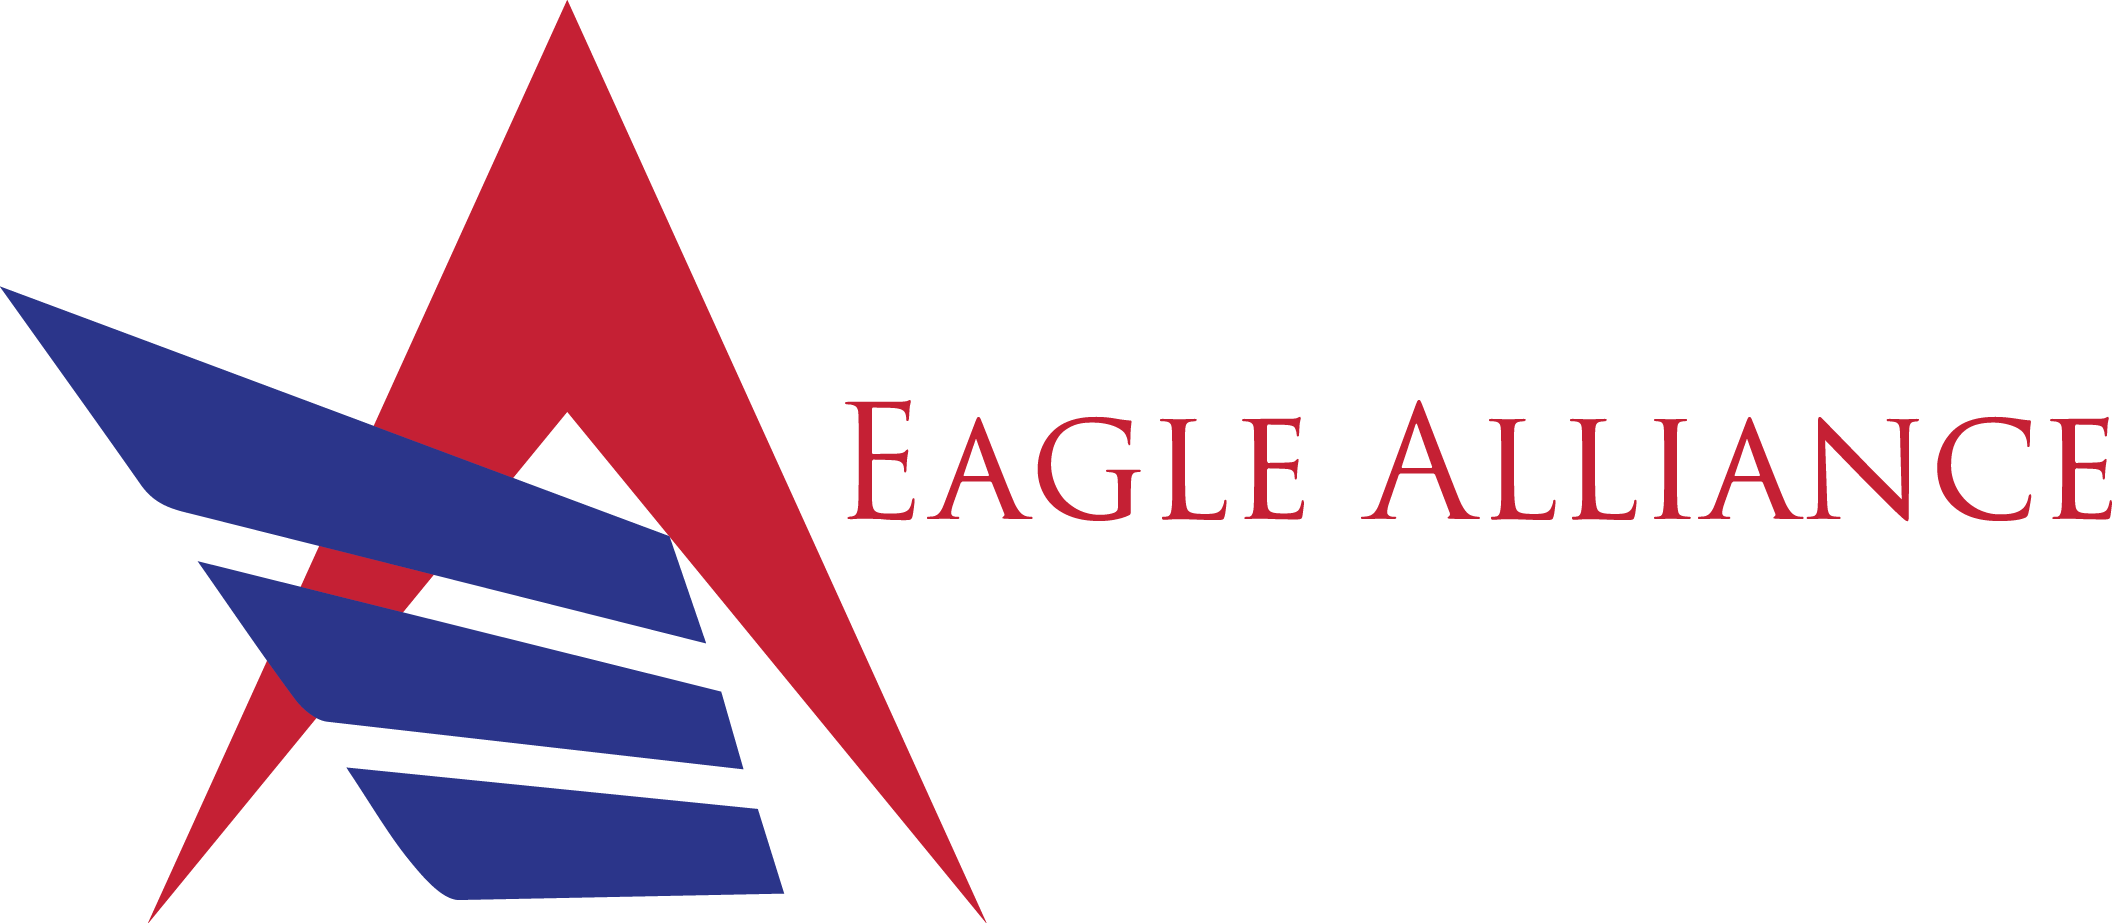 Eagle Alliance large